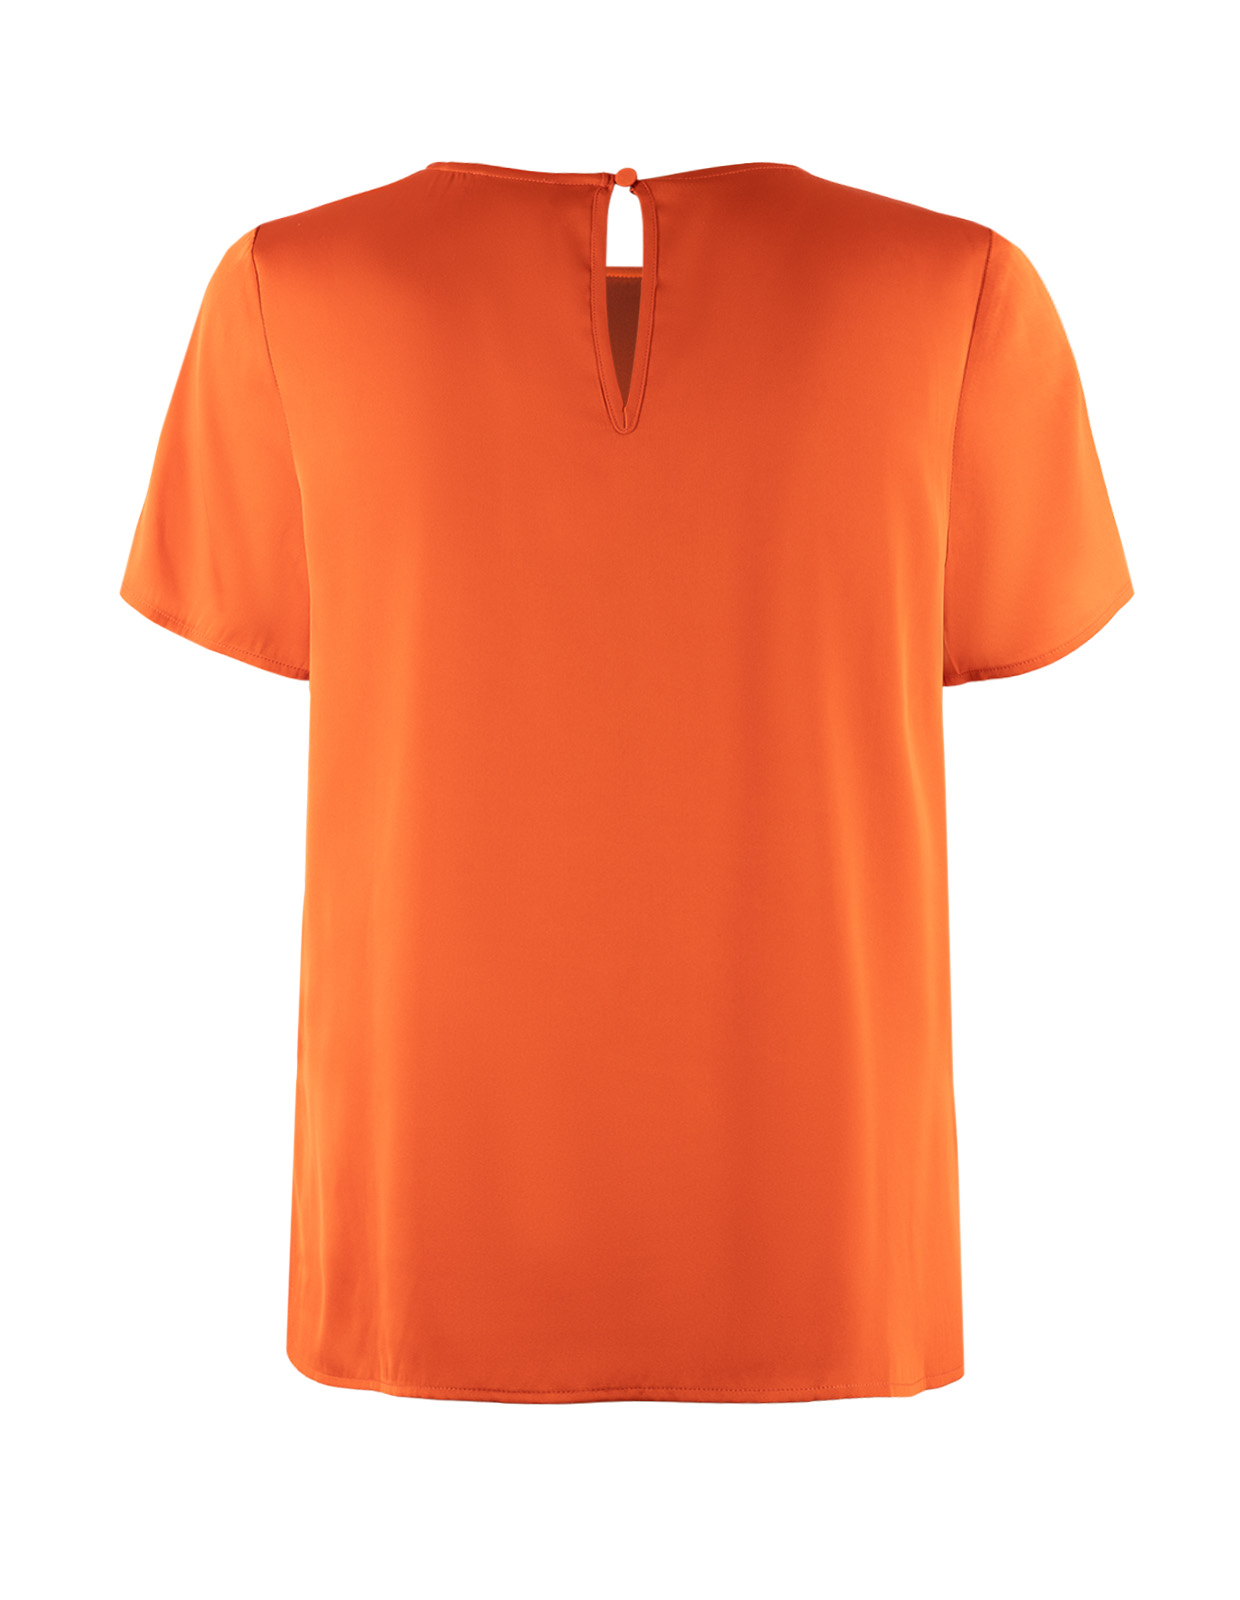 Lorna T-shirt Siden Orange Stl 42